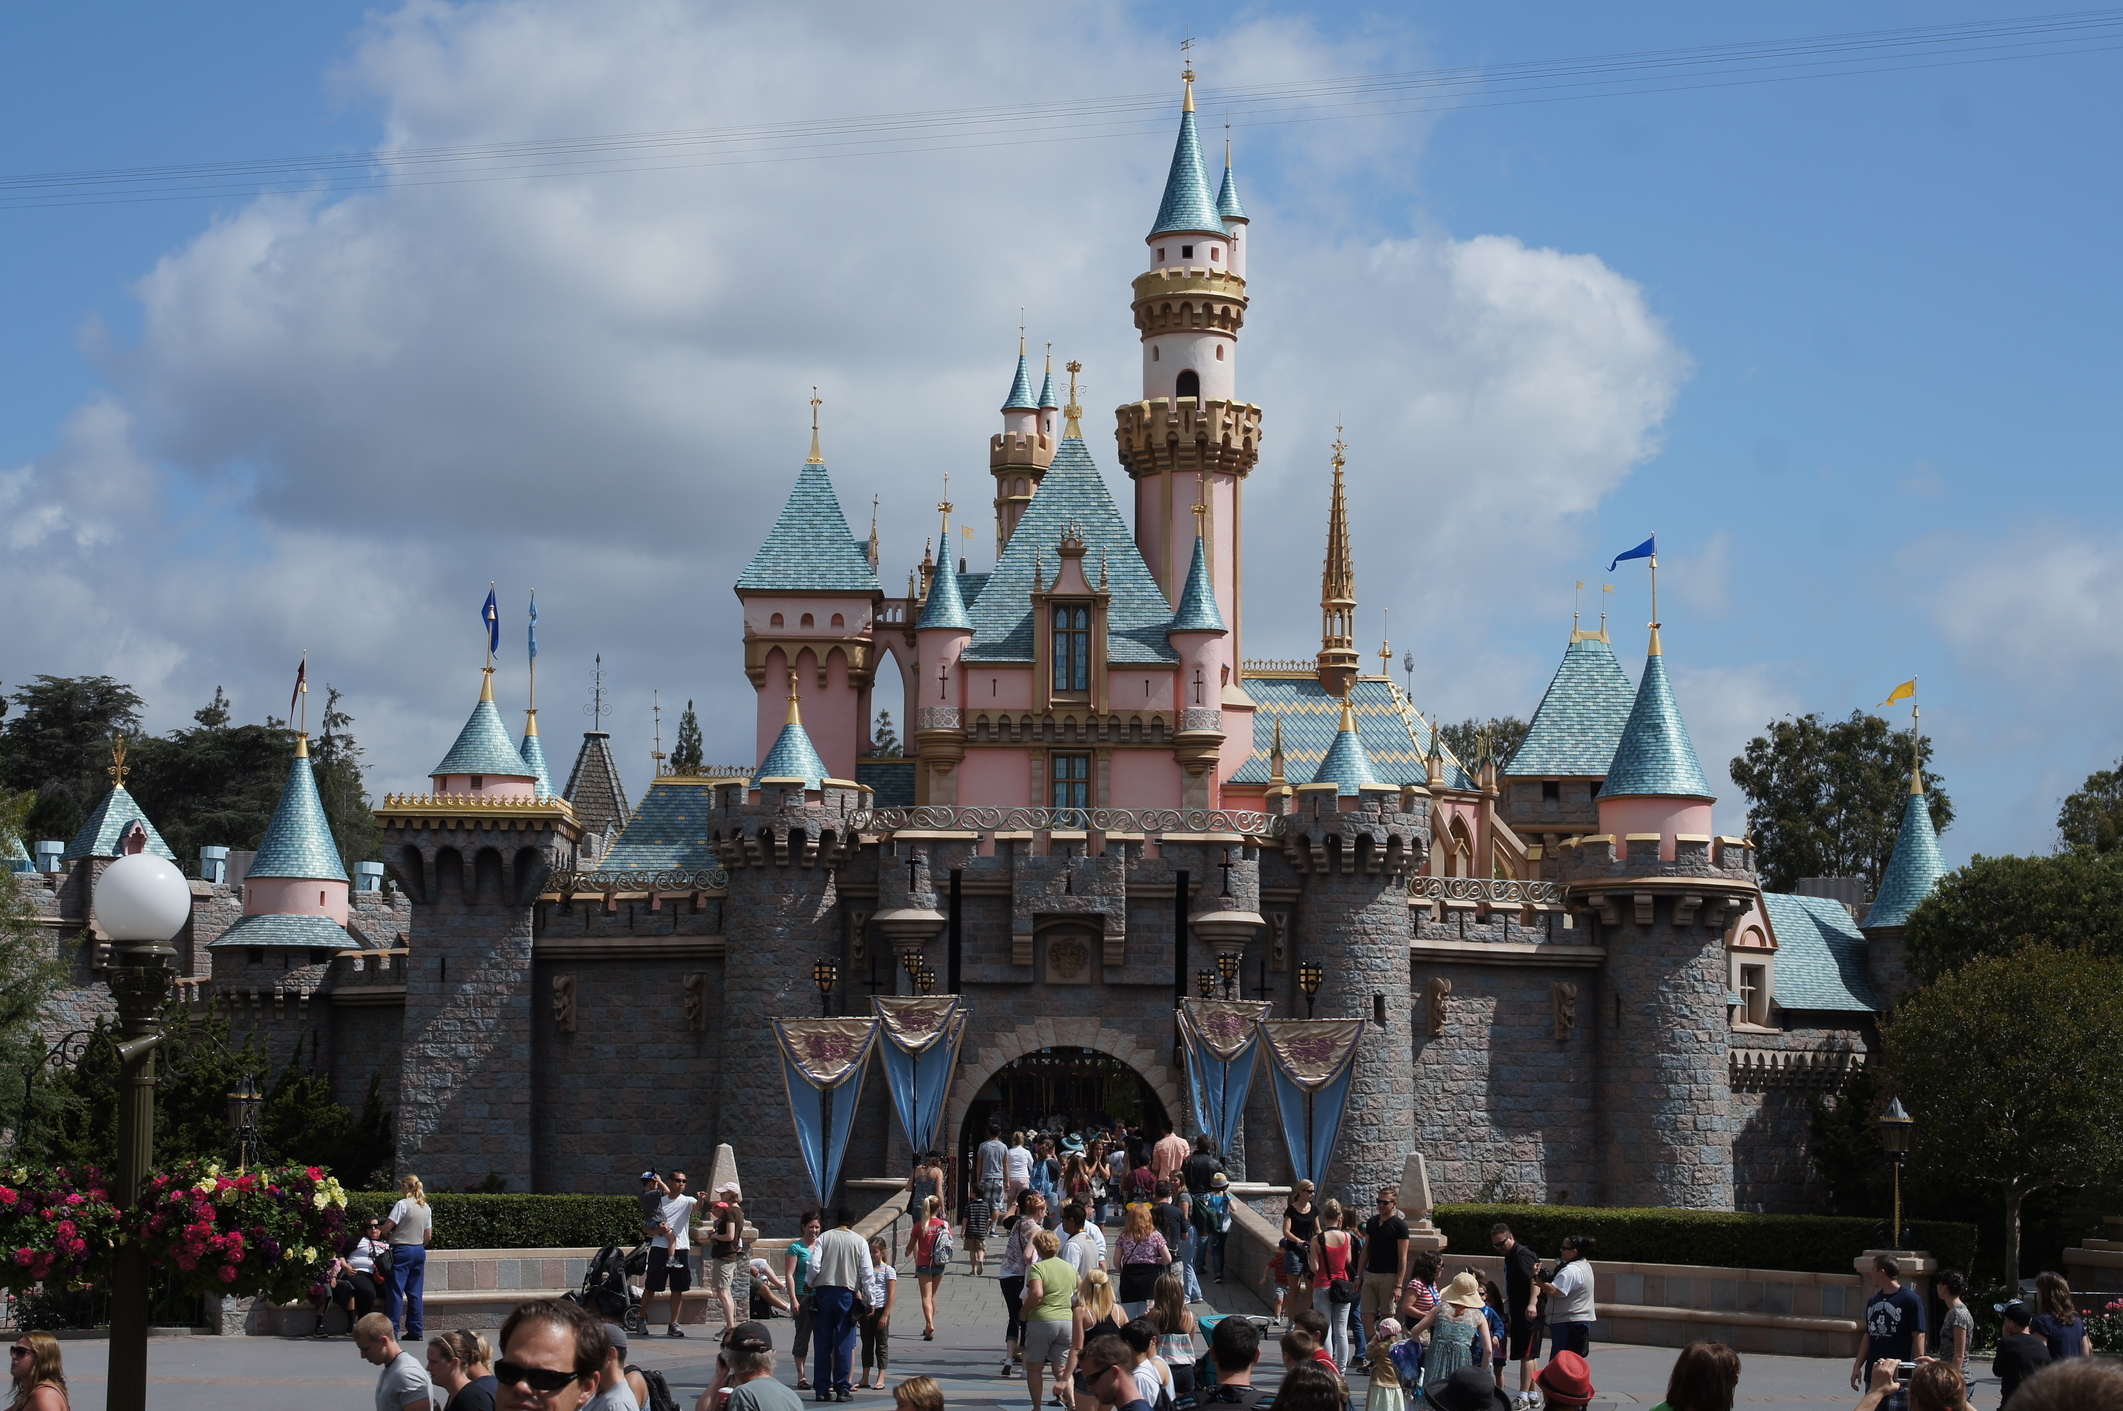 A view of Disneyland's Sleeping Beauty Castle.